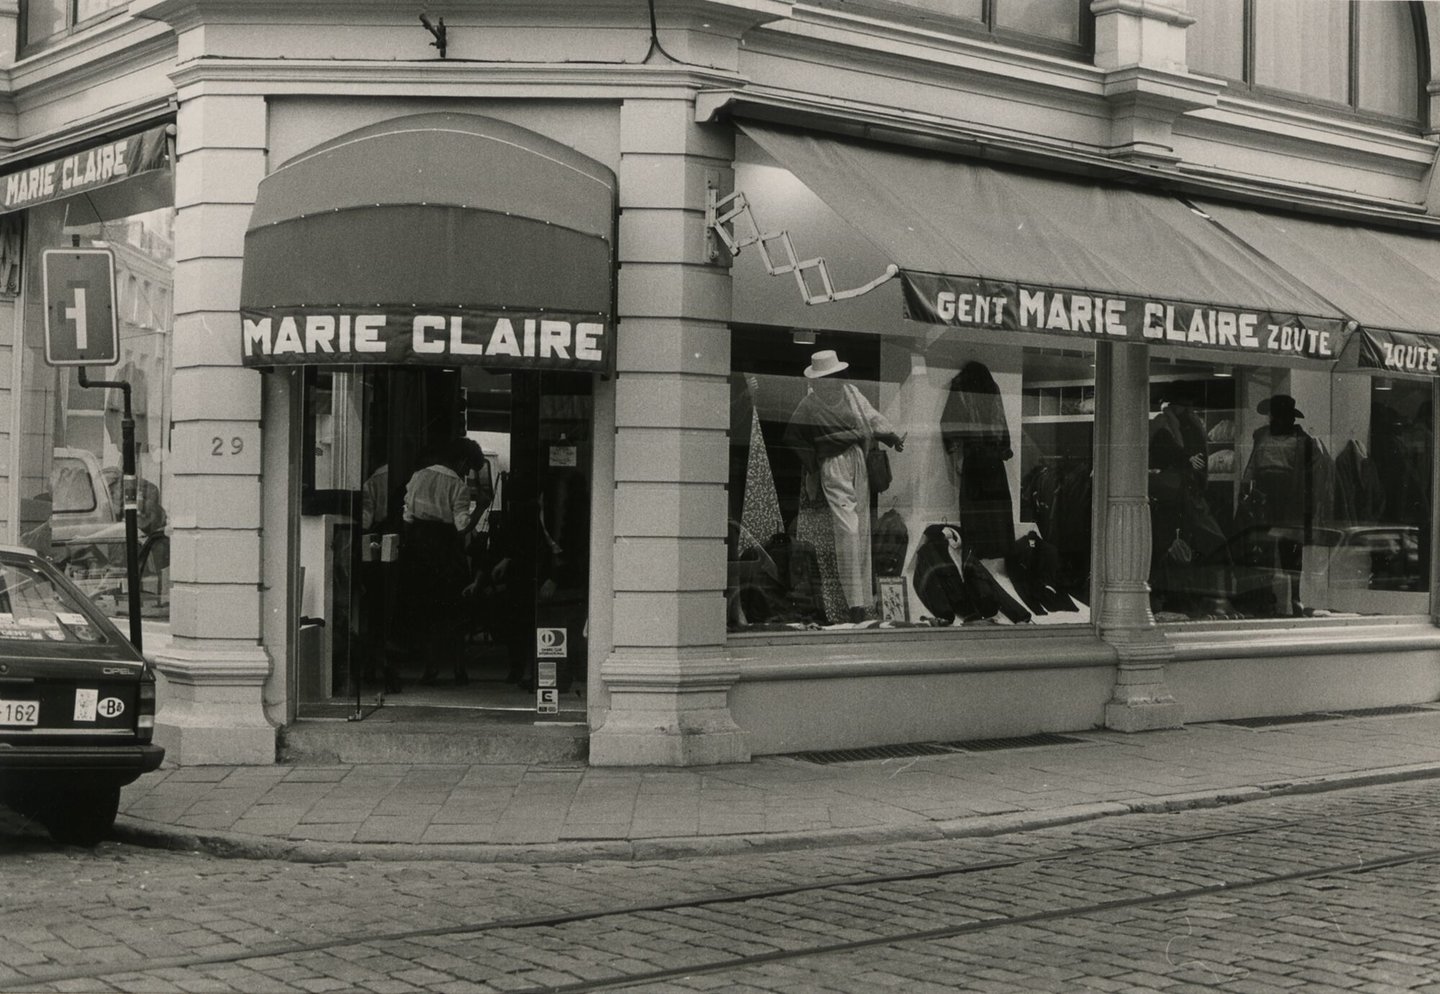 Etalage van kledingwinkel Marie Claire in Gent